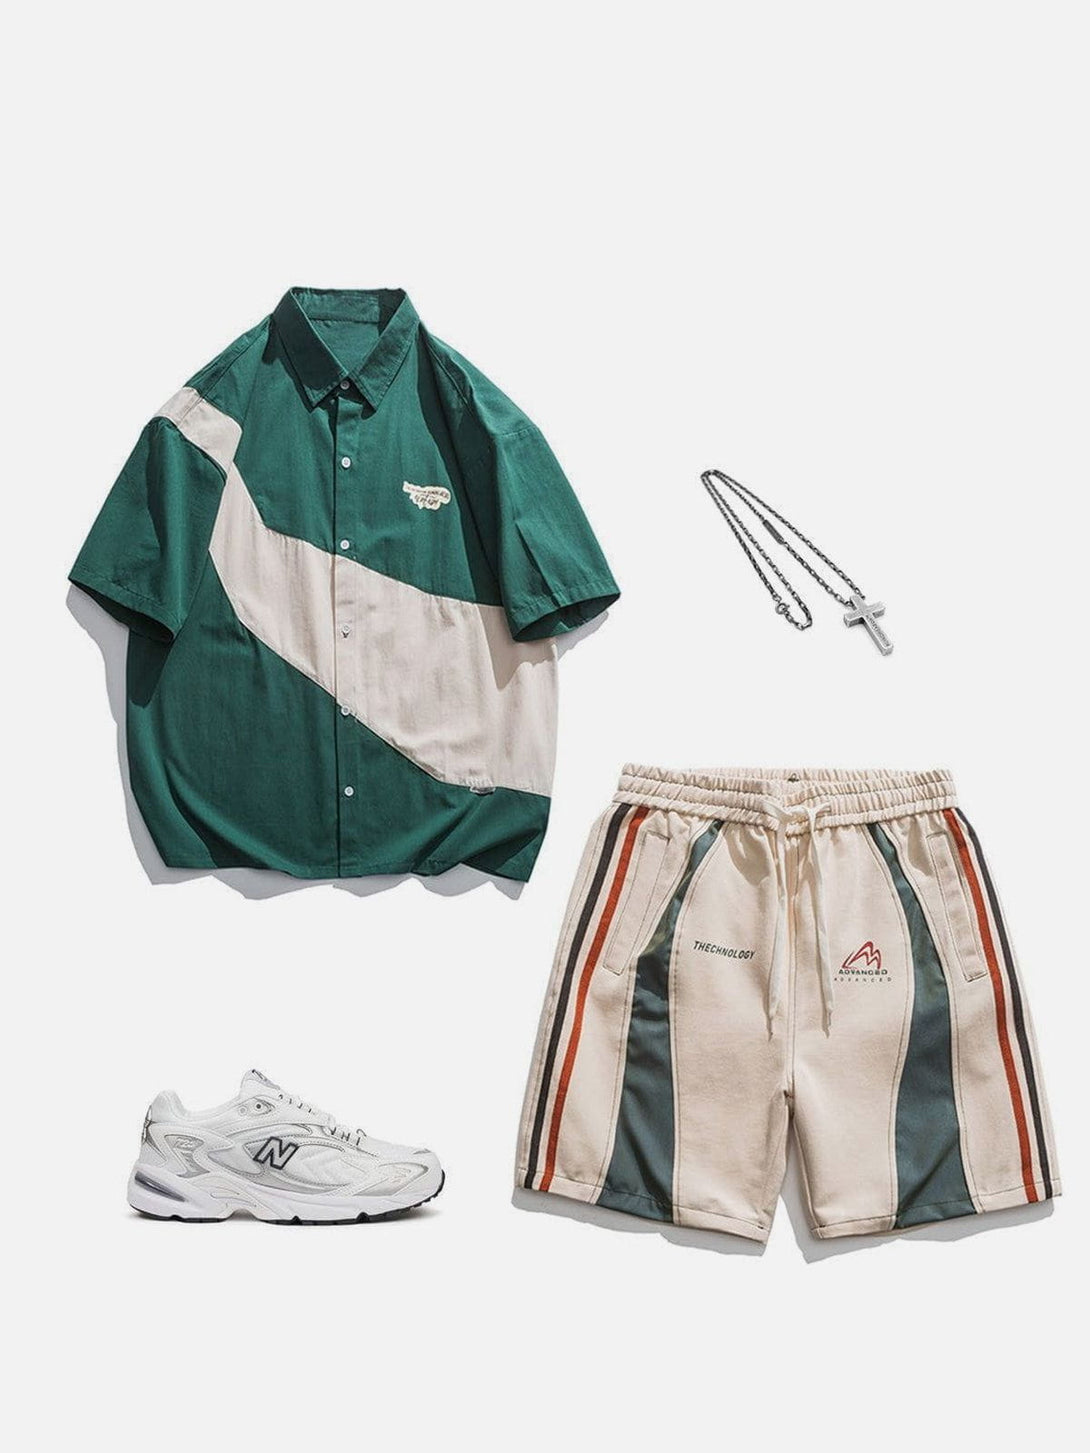 Majesda® - Splice Sport Shorts outfit ideas streetwear fashion